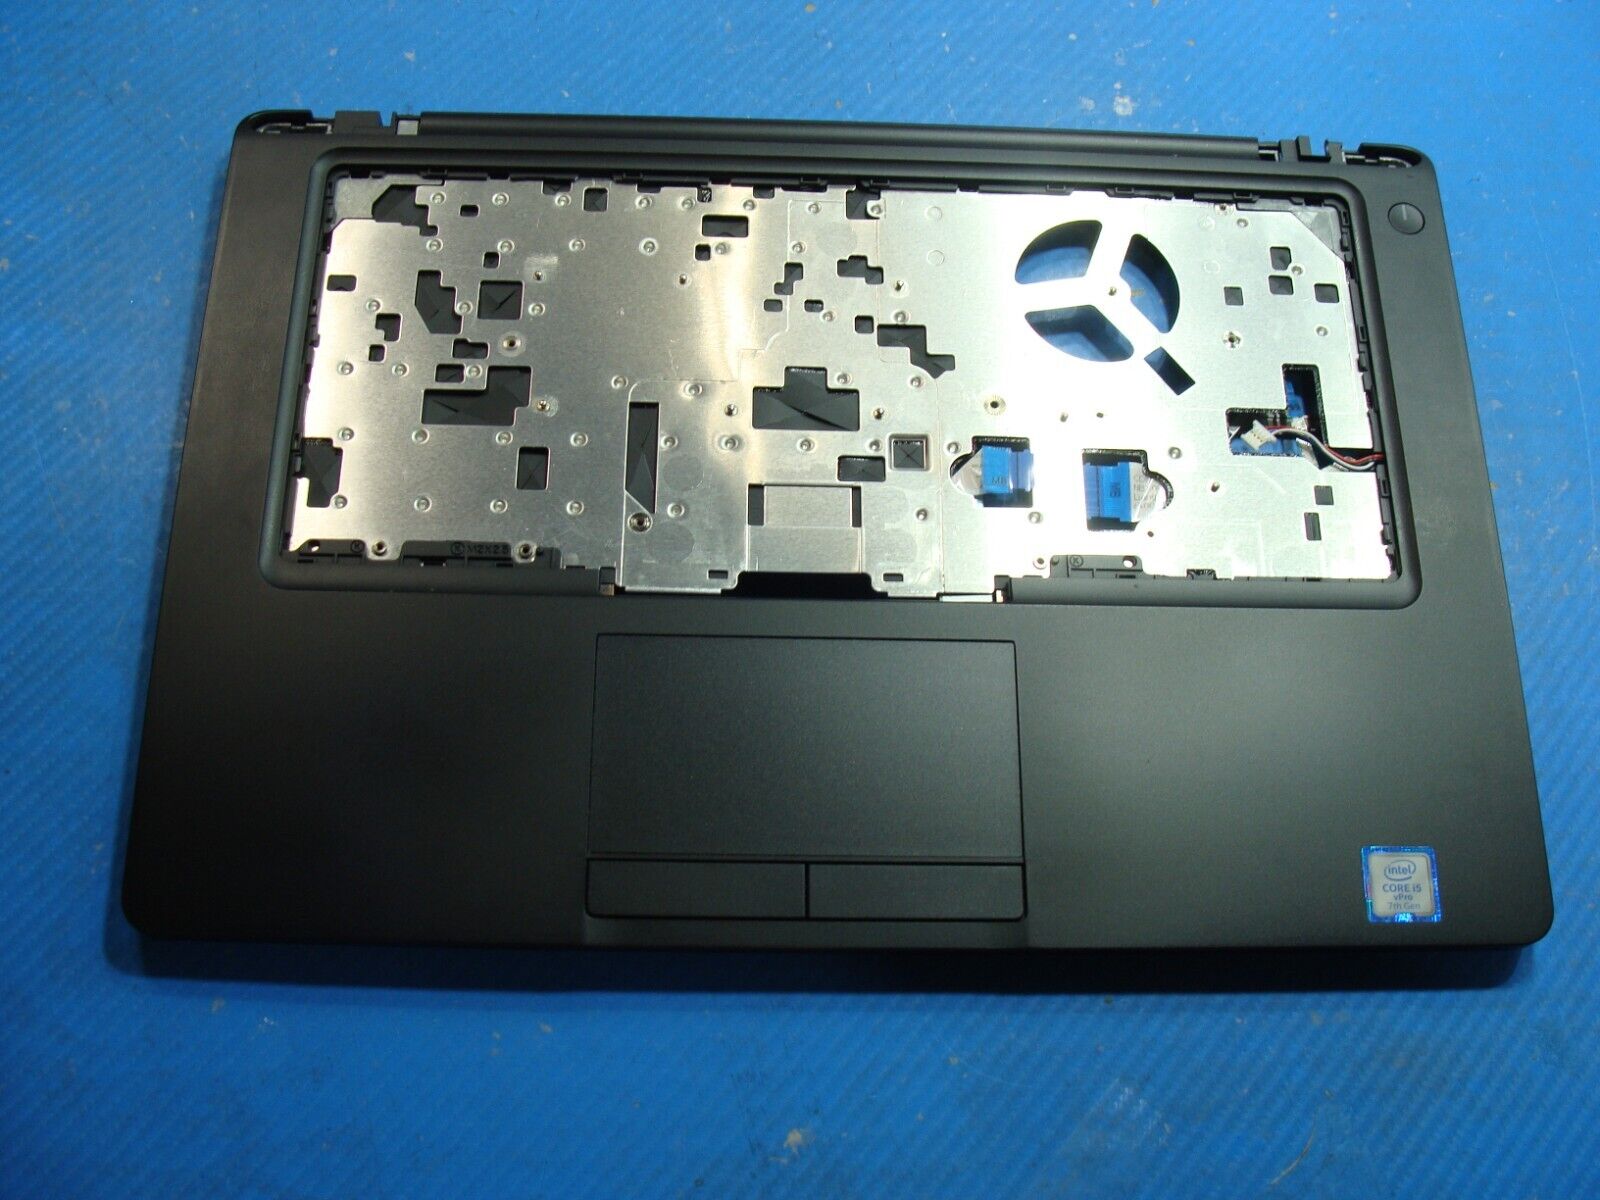 Dell Latitude 14” 5480 Genuine Palmrest w/TouchPad & Speakers CN2T6 AP1SD000200